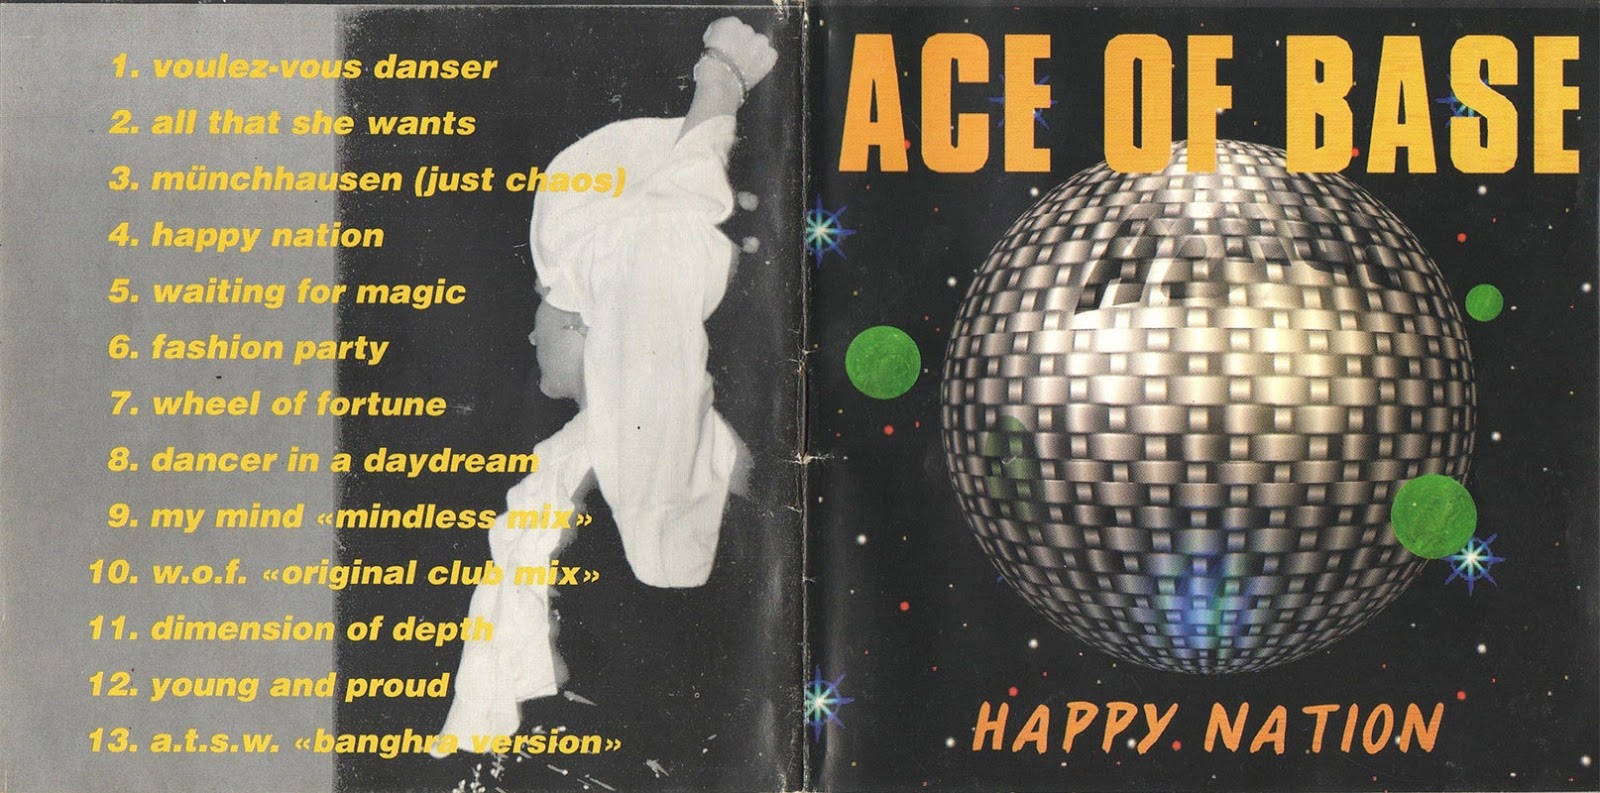 Happy nation год. Ace of Base 1992. Хэппи натион. Ace of Base Happy Nation. Ace of Base Happy Nation album.